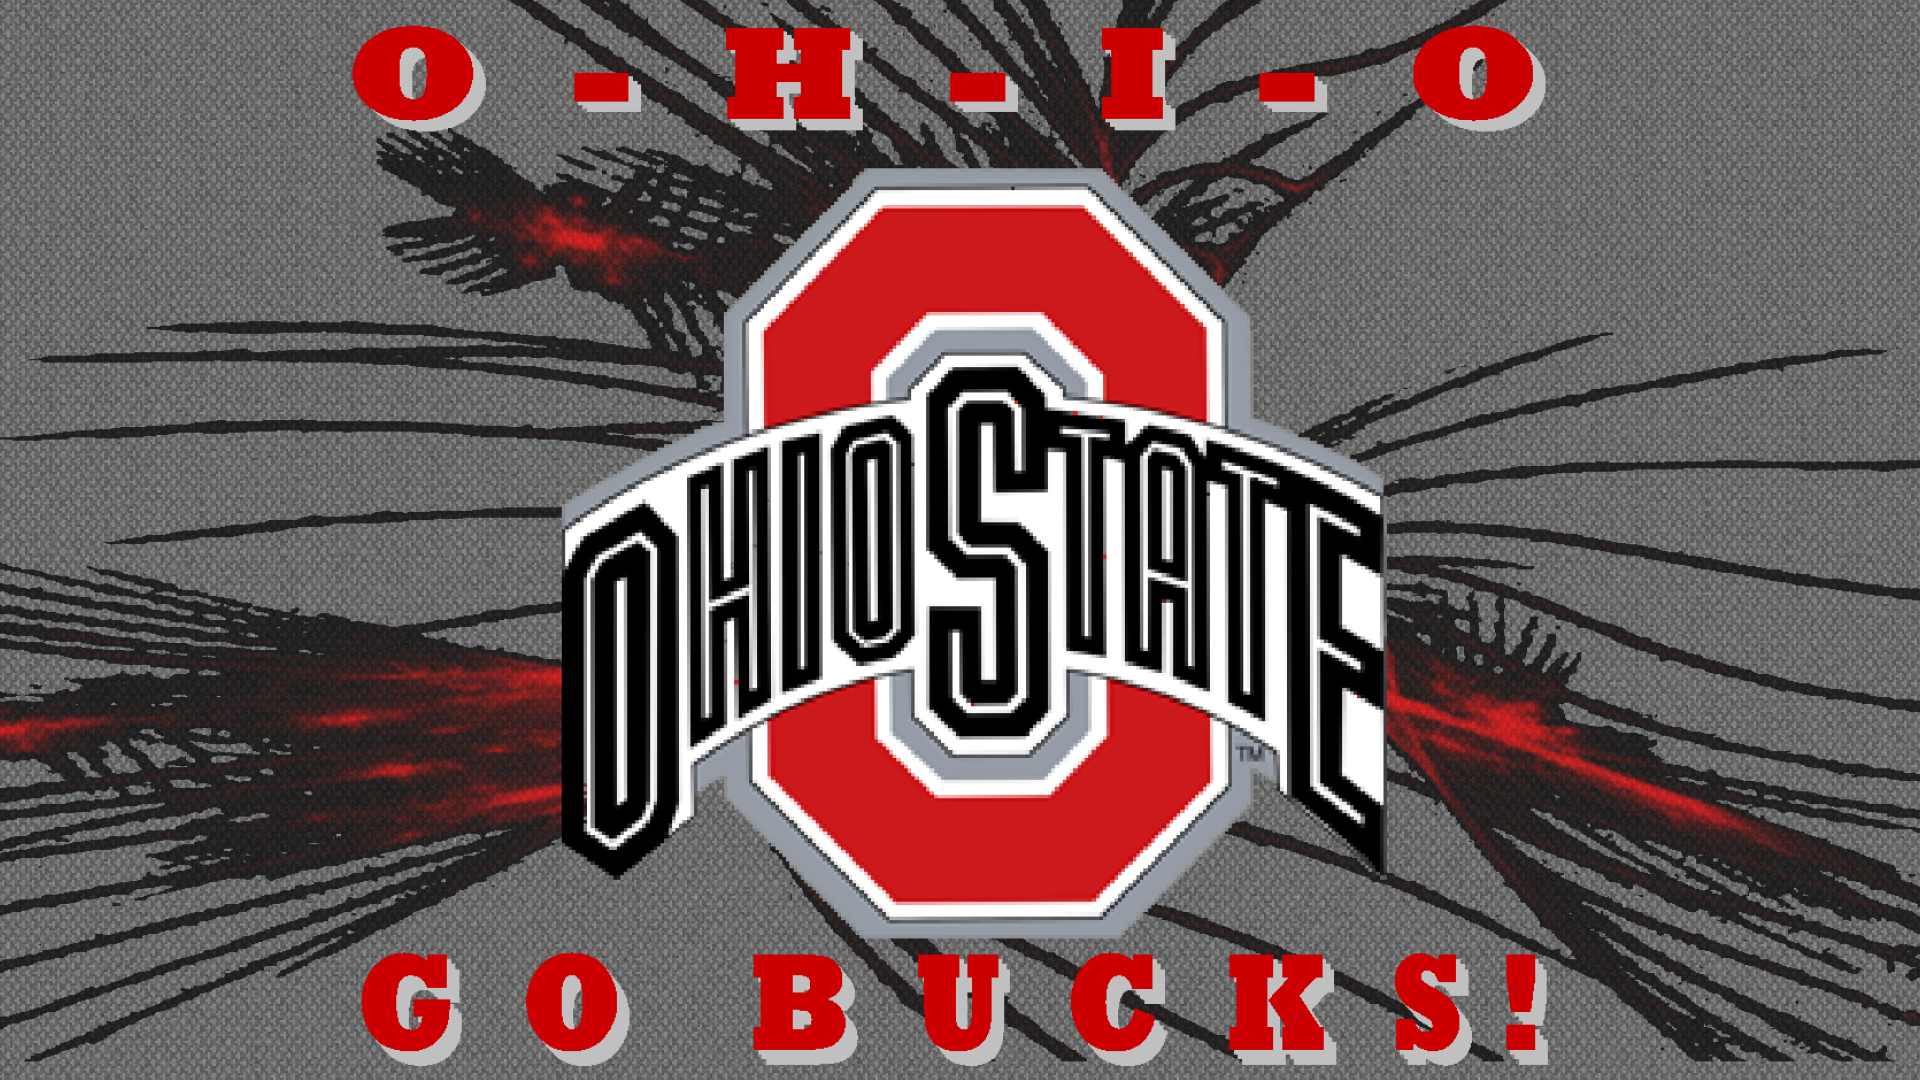 O-H-I-O GO BUCKS! - Ohio State University Basketball Wallpaper (26349630) - Fanpop